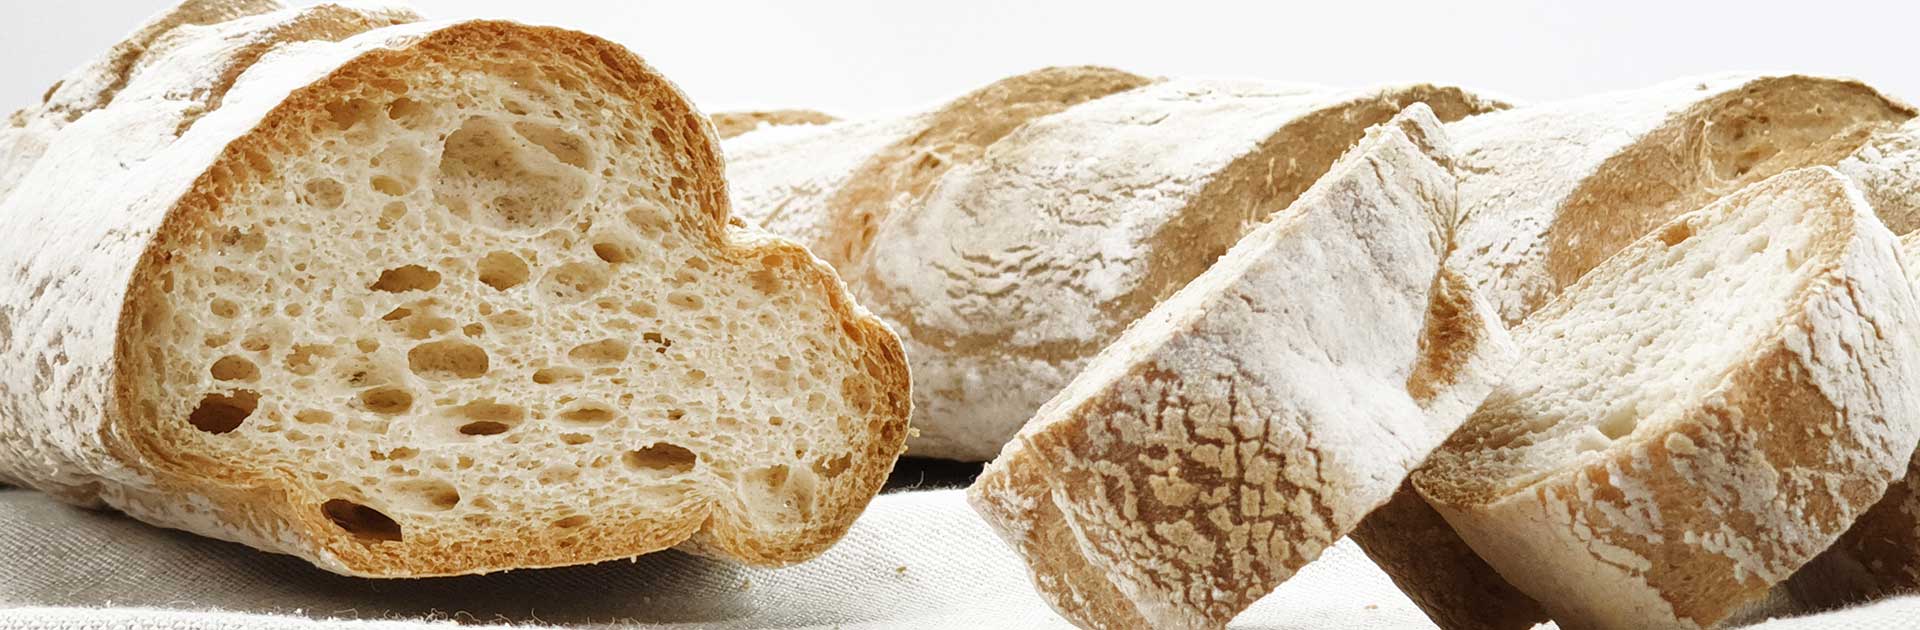 Brotbackmischungen low carb, glutenfrei, sojafrei